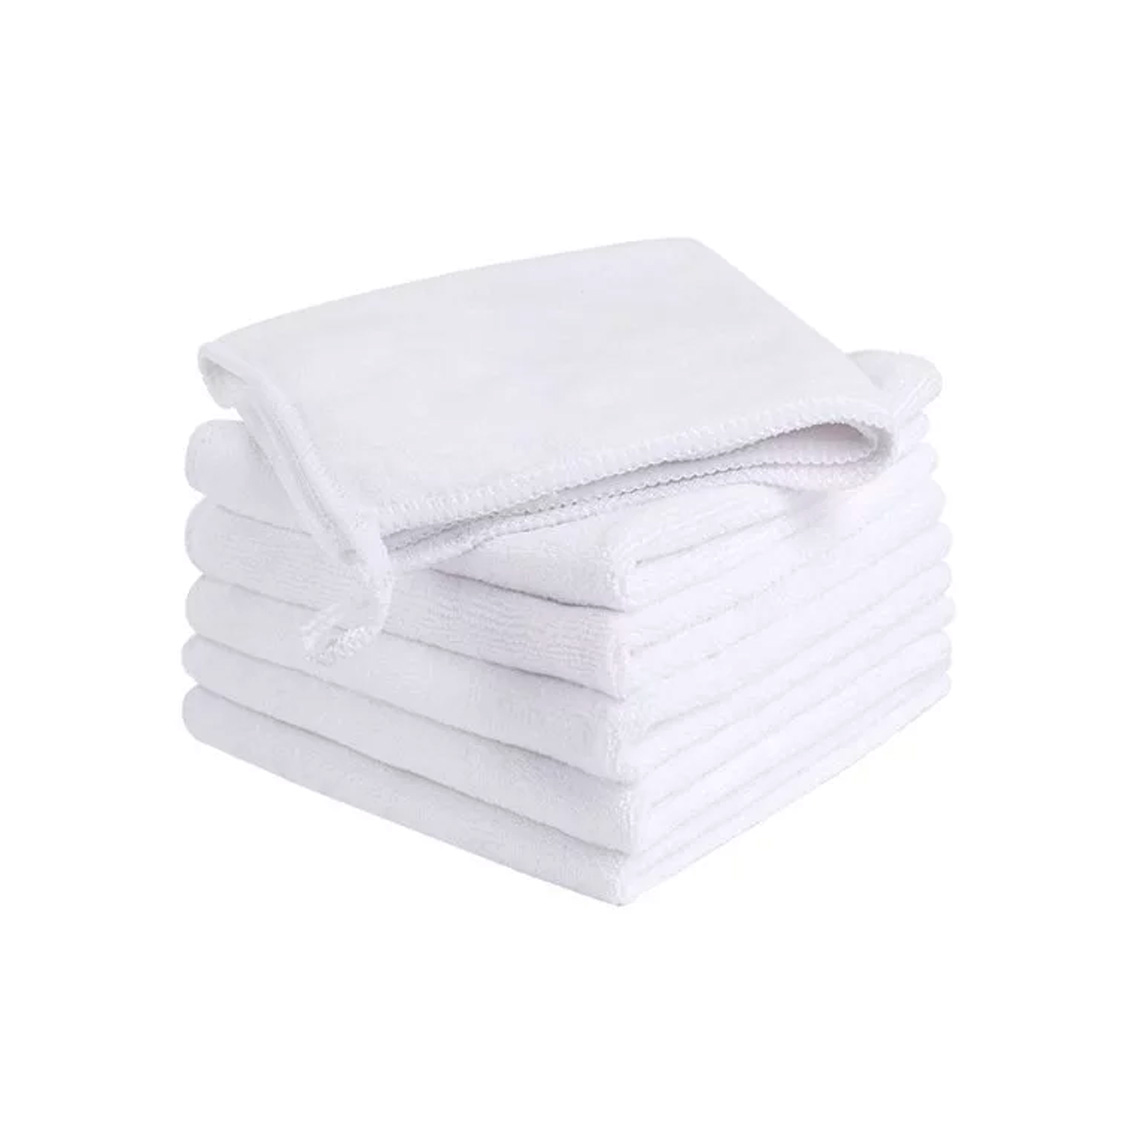 a set of six white, super soft multi-purpose towels